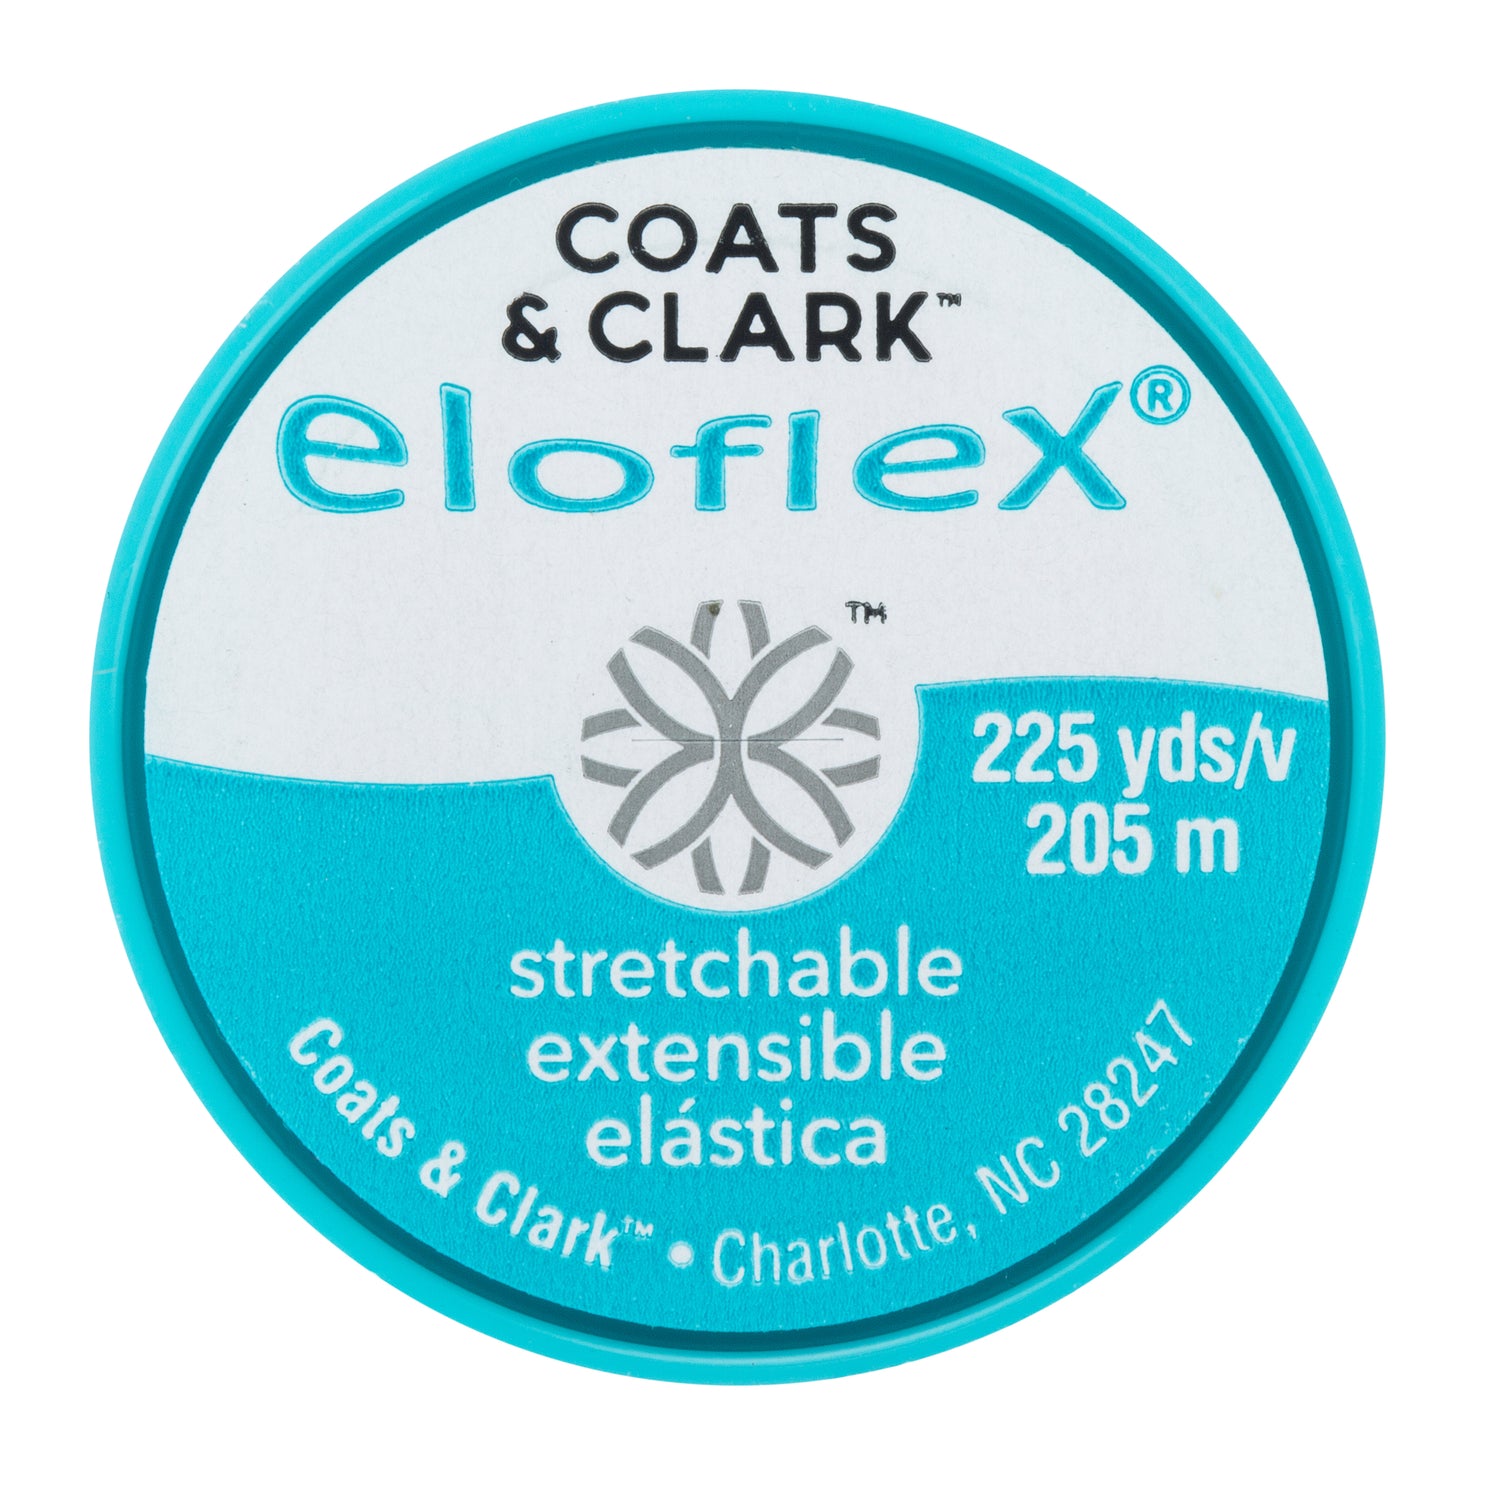 Coats & Clark Eloflex Stretchable Thread All Variants